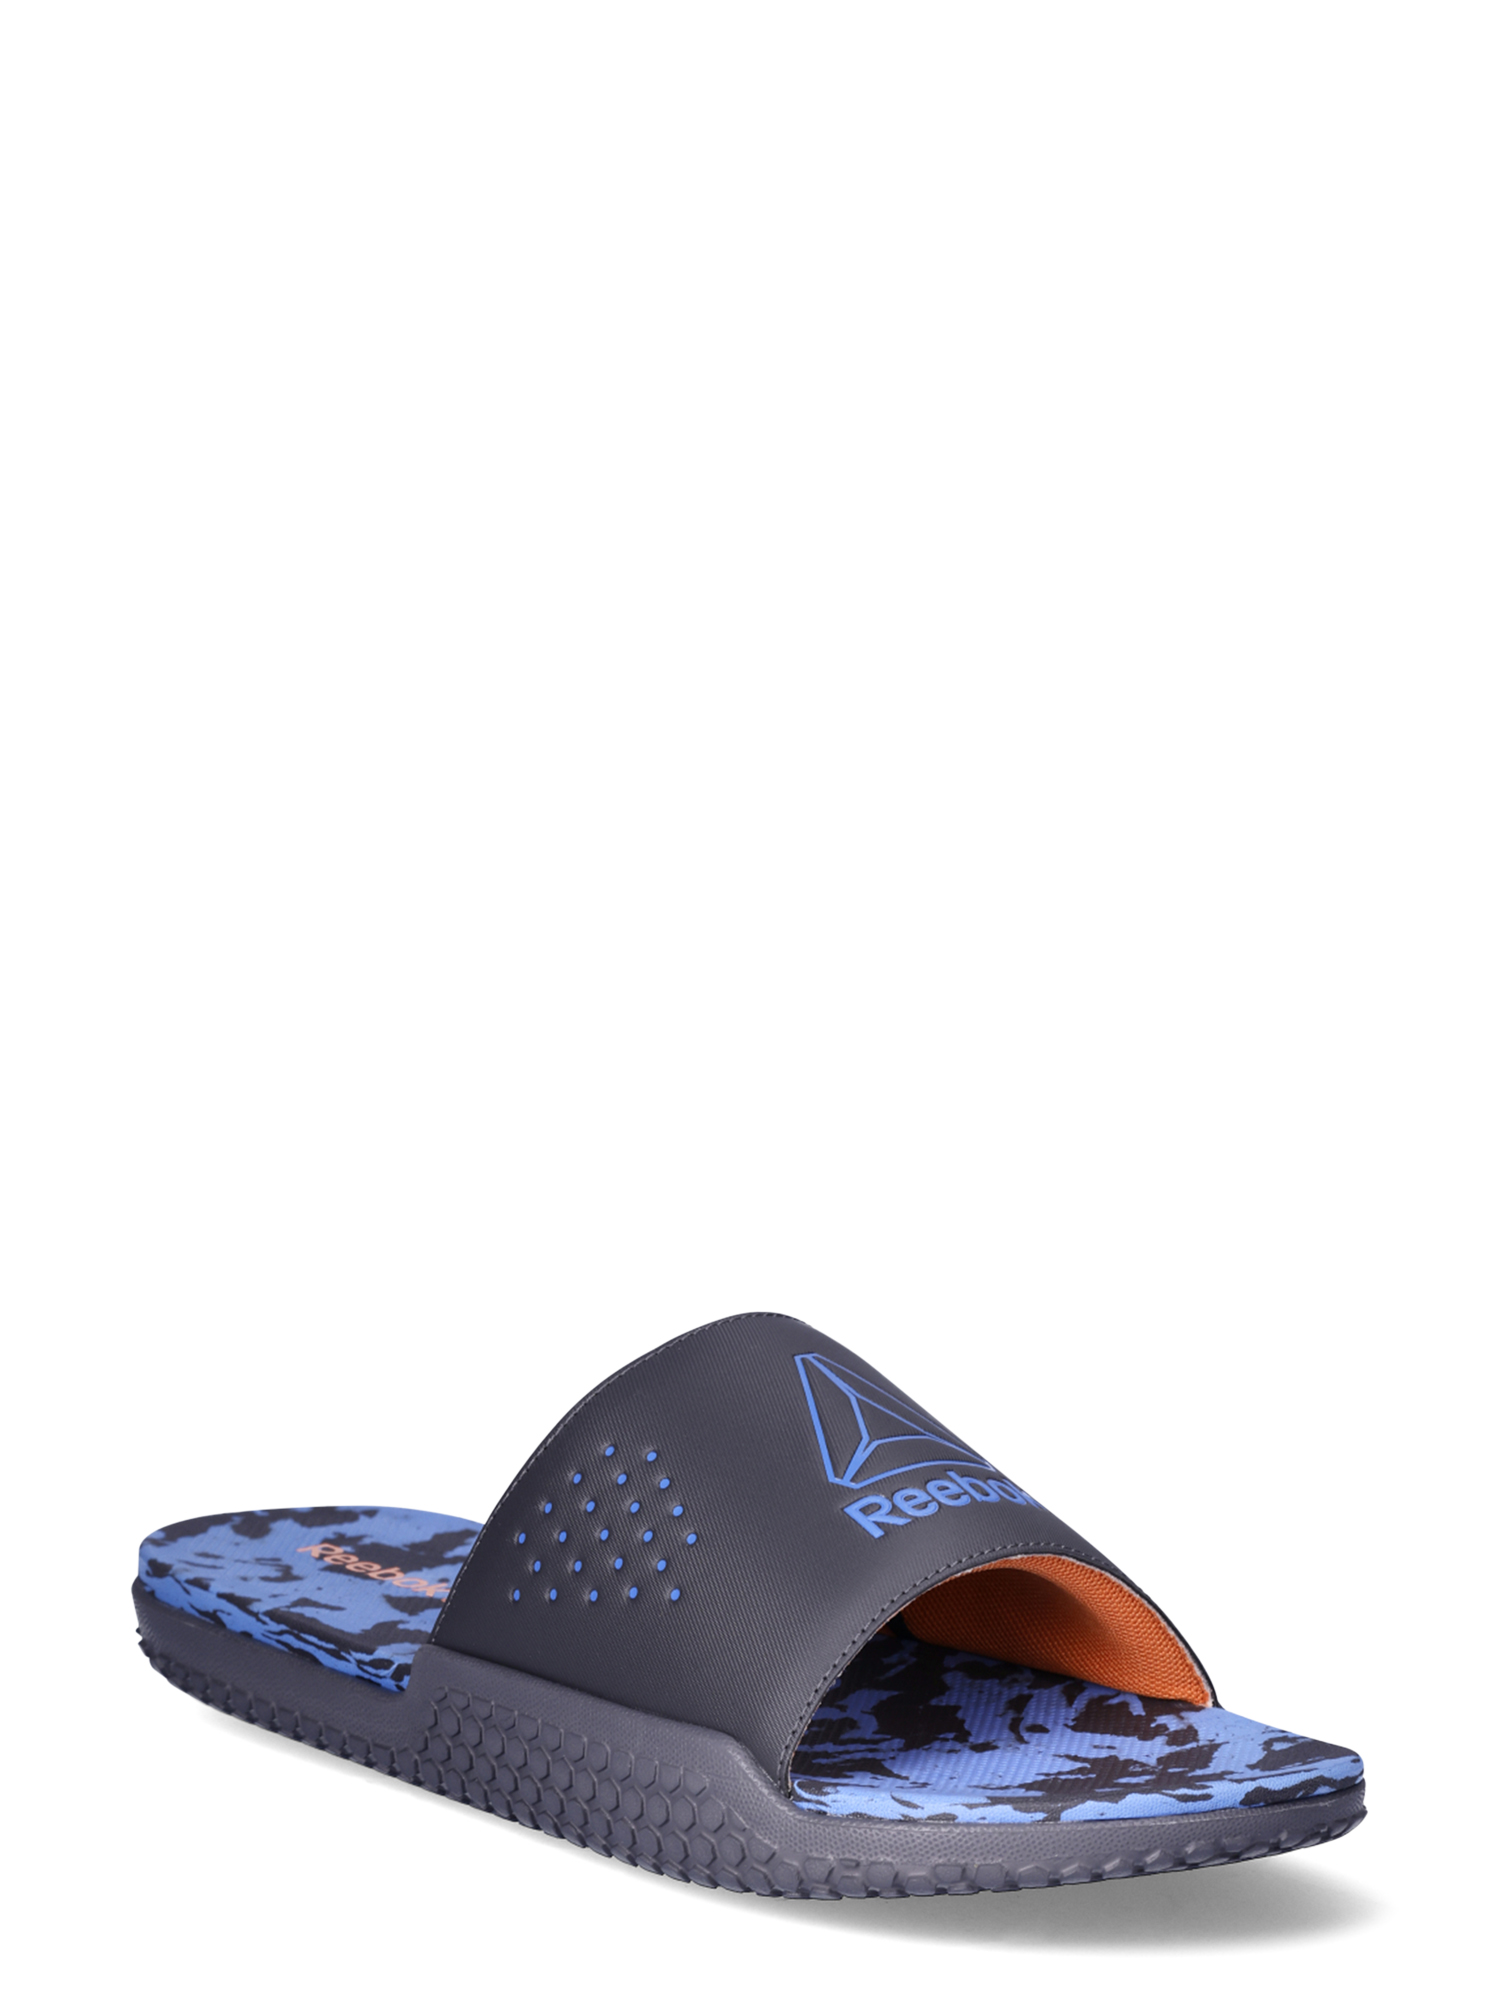 Reebok Men's Pervade Dual Density Slide Sandal - image 1 of 7